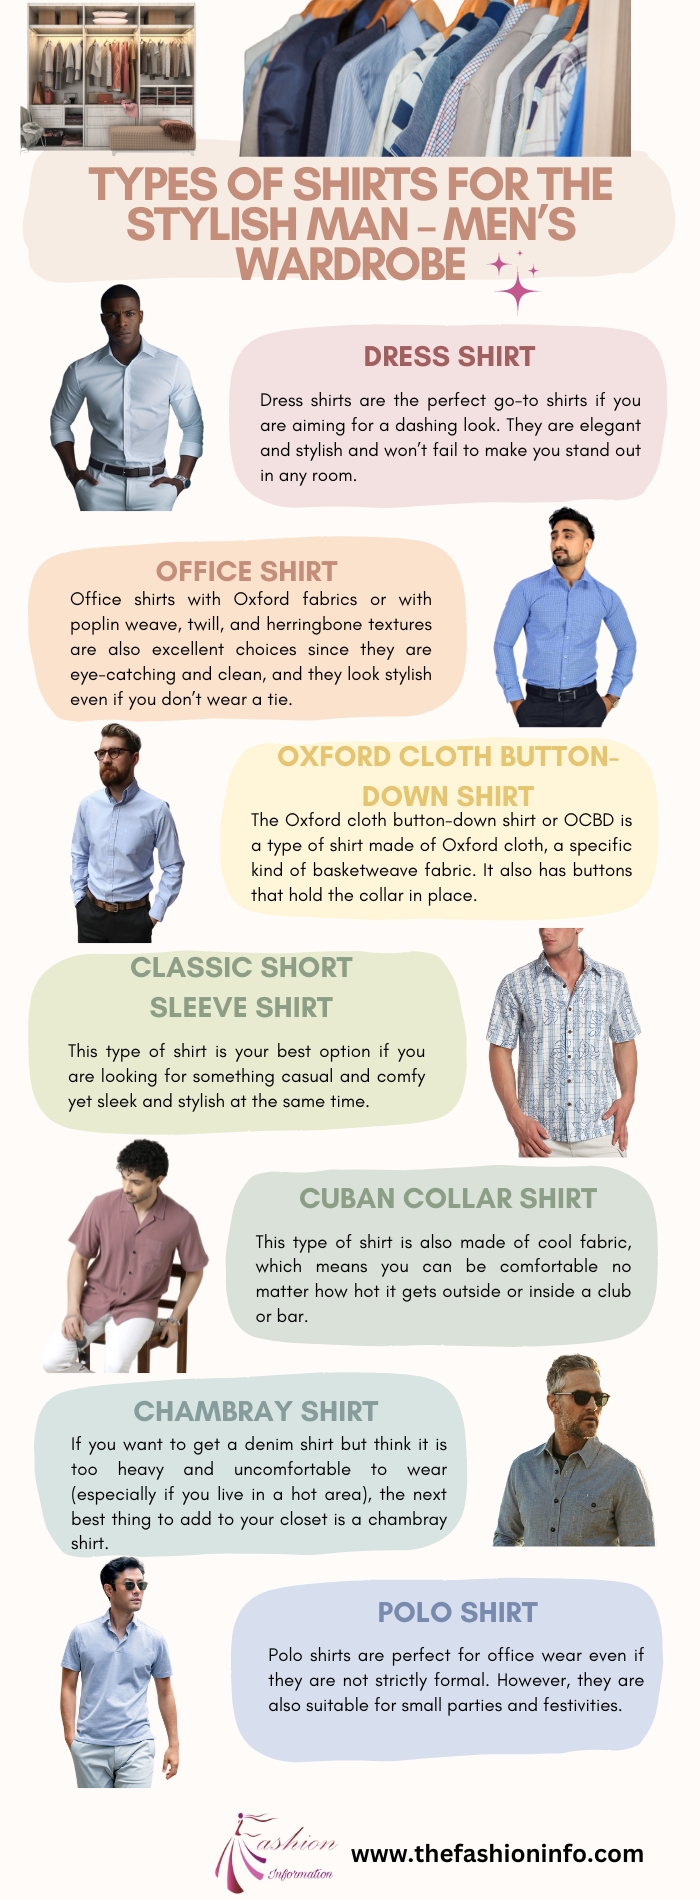 Types of Shirts for the Stylish Man – Men’s Wardrobe